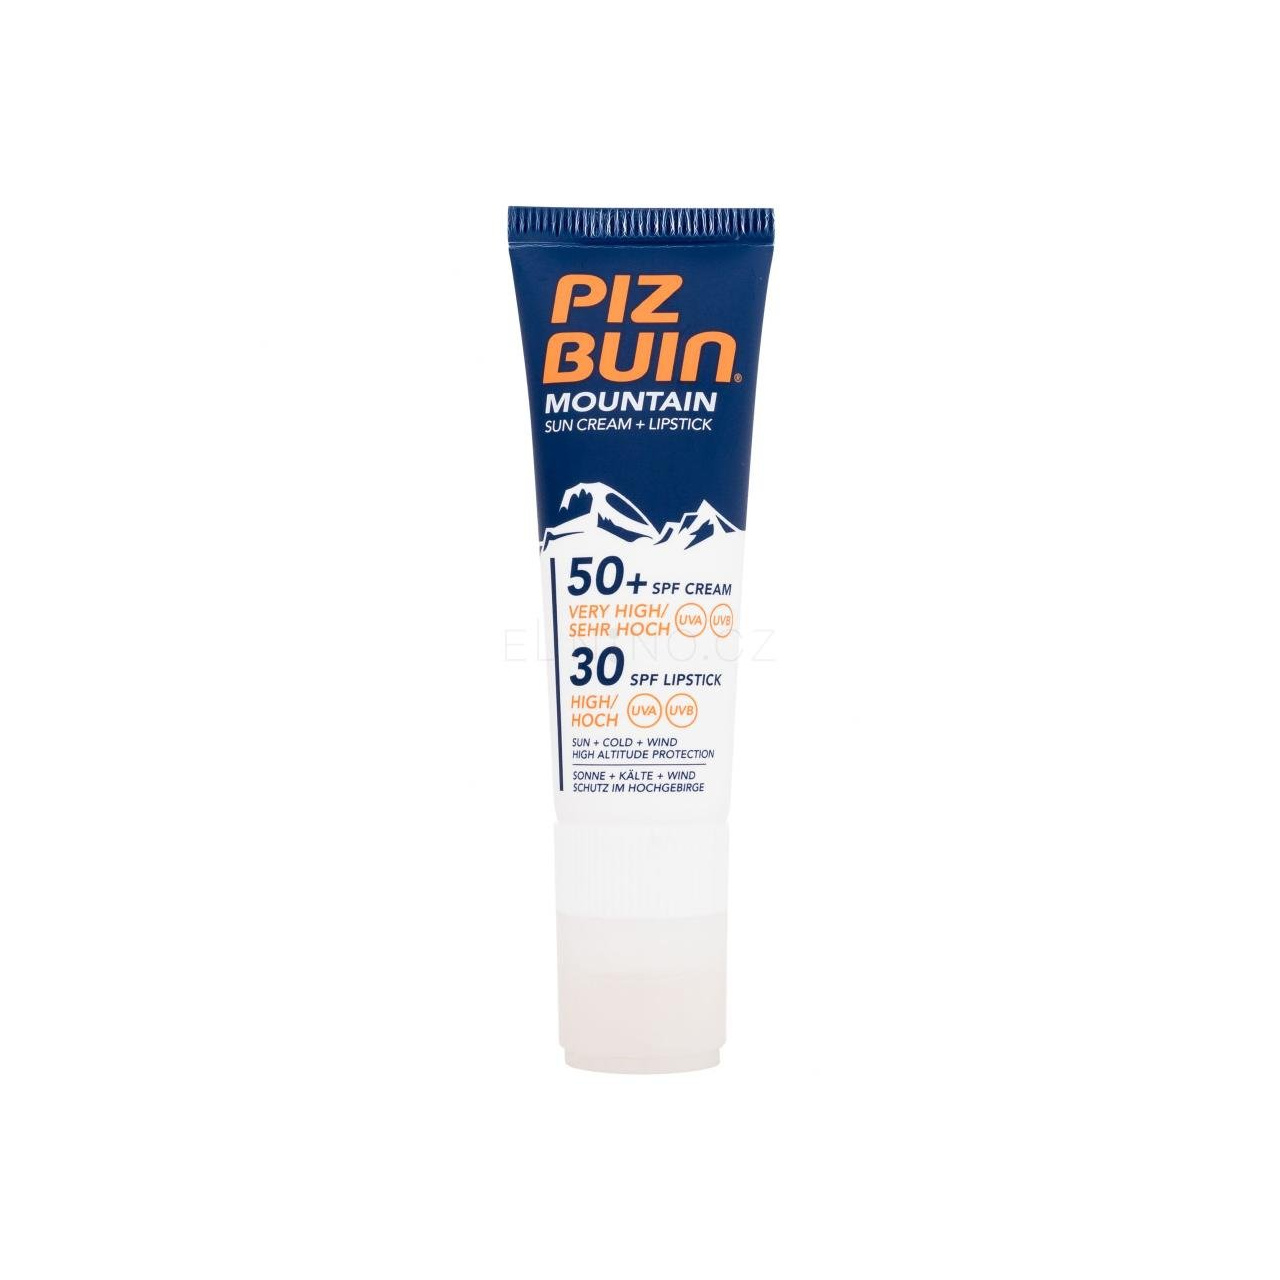 Piz Buin Mountain Combi Cream SPF50+Lipstic SPF30 20ml